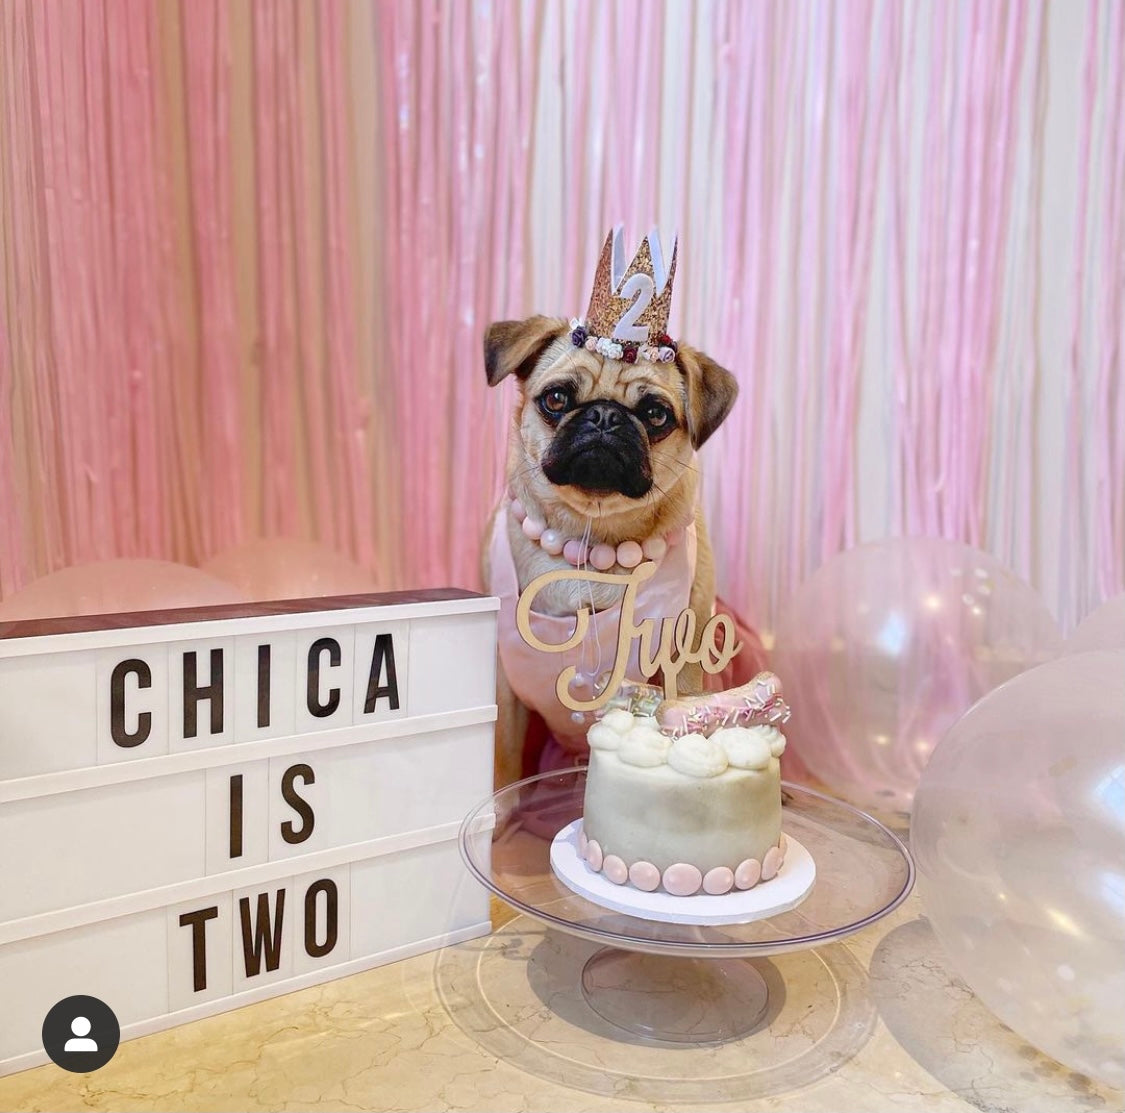 Pug dog cake | Pug birthday cake, Pug dog cake, Pug cake